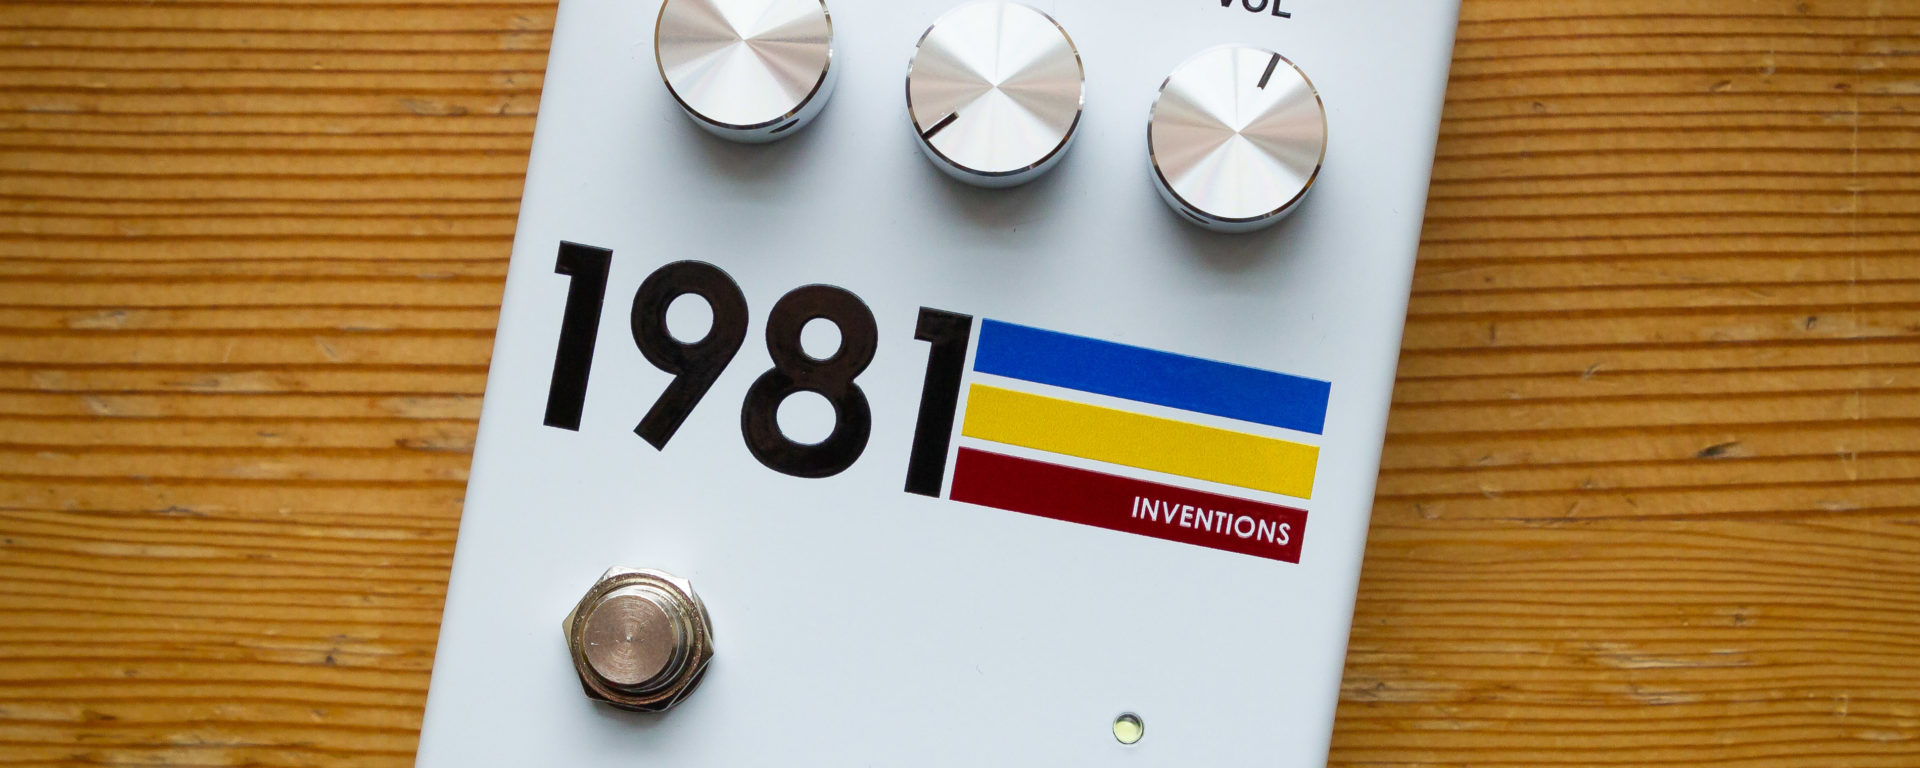 1981 Inventions DRV No3